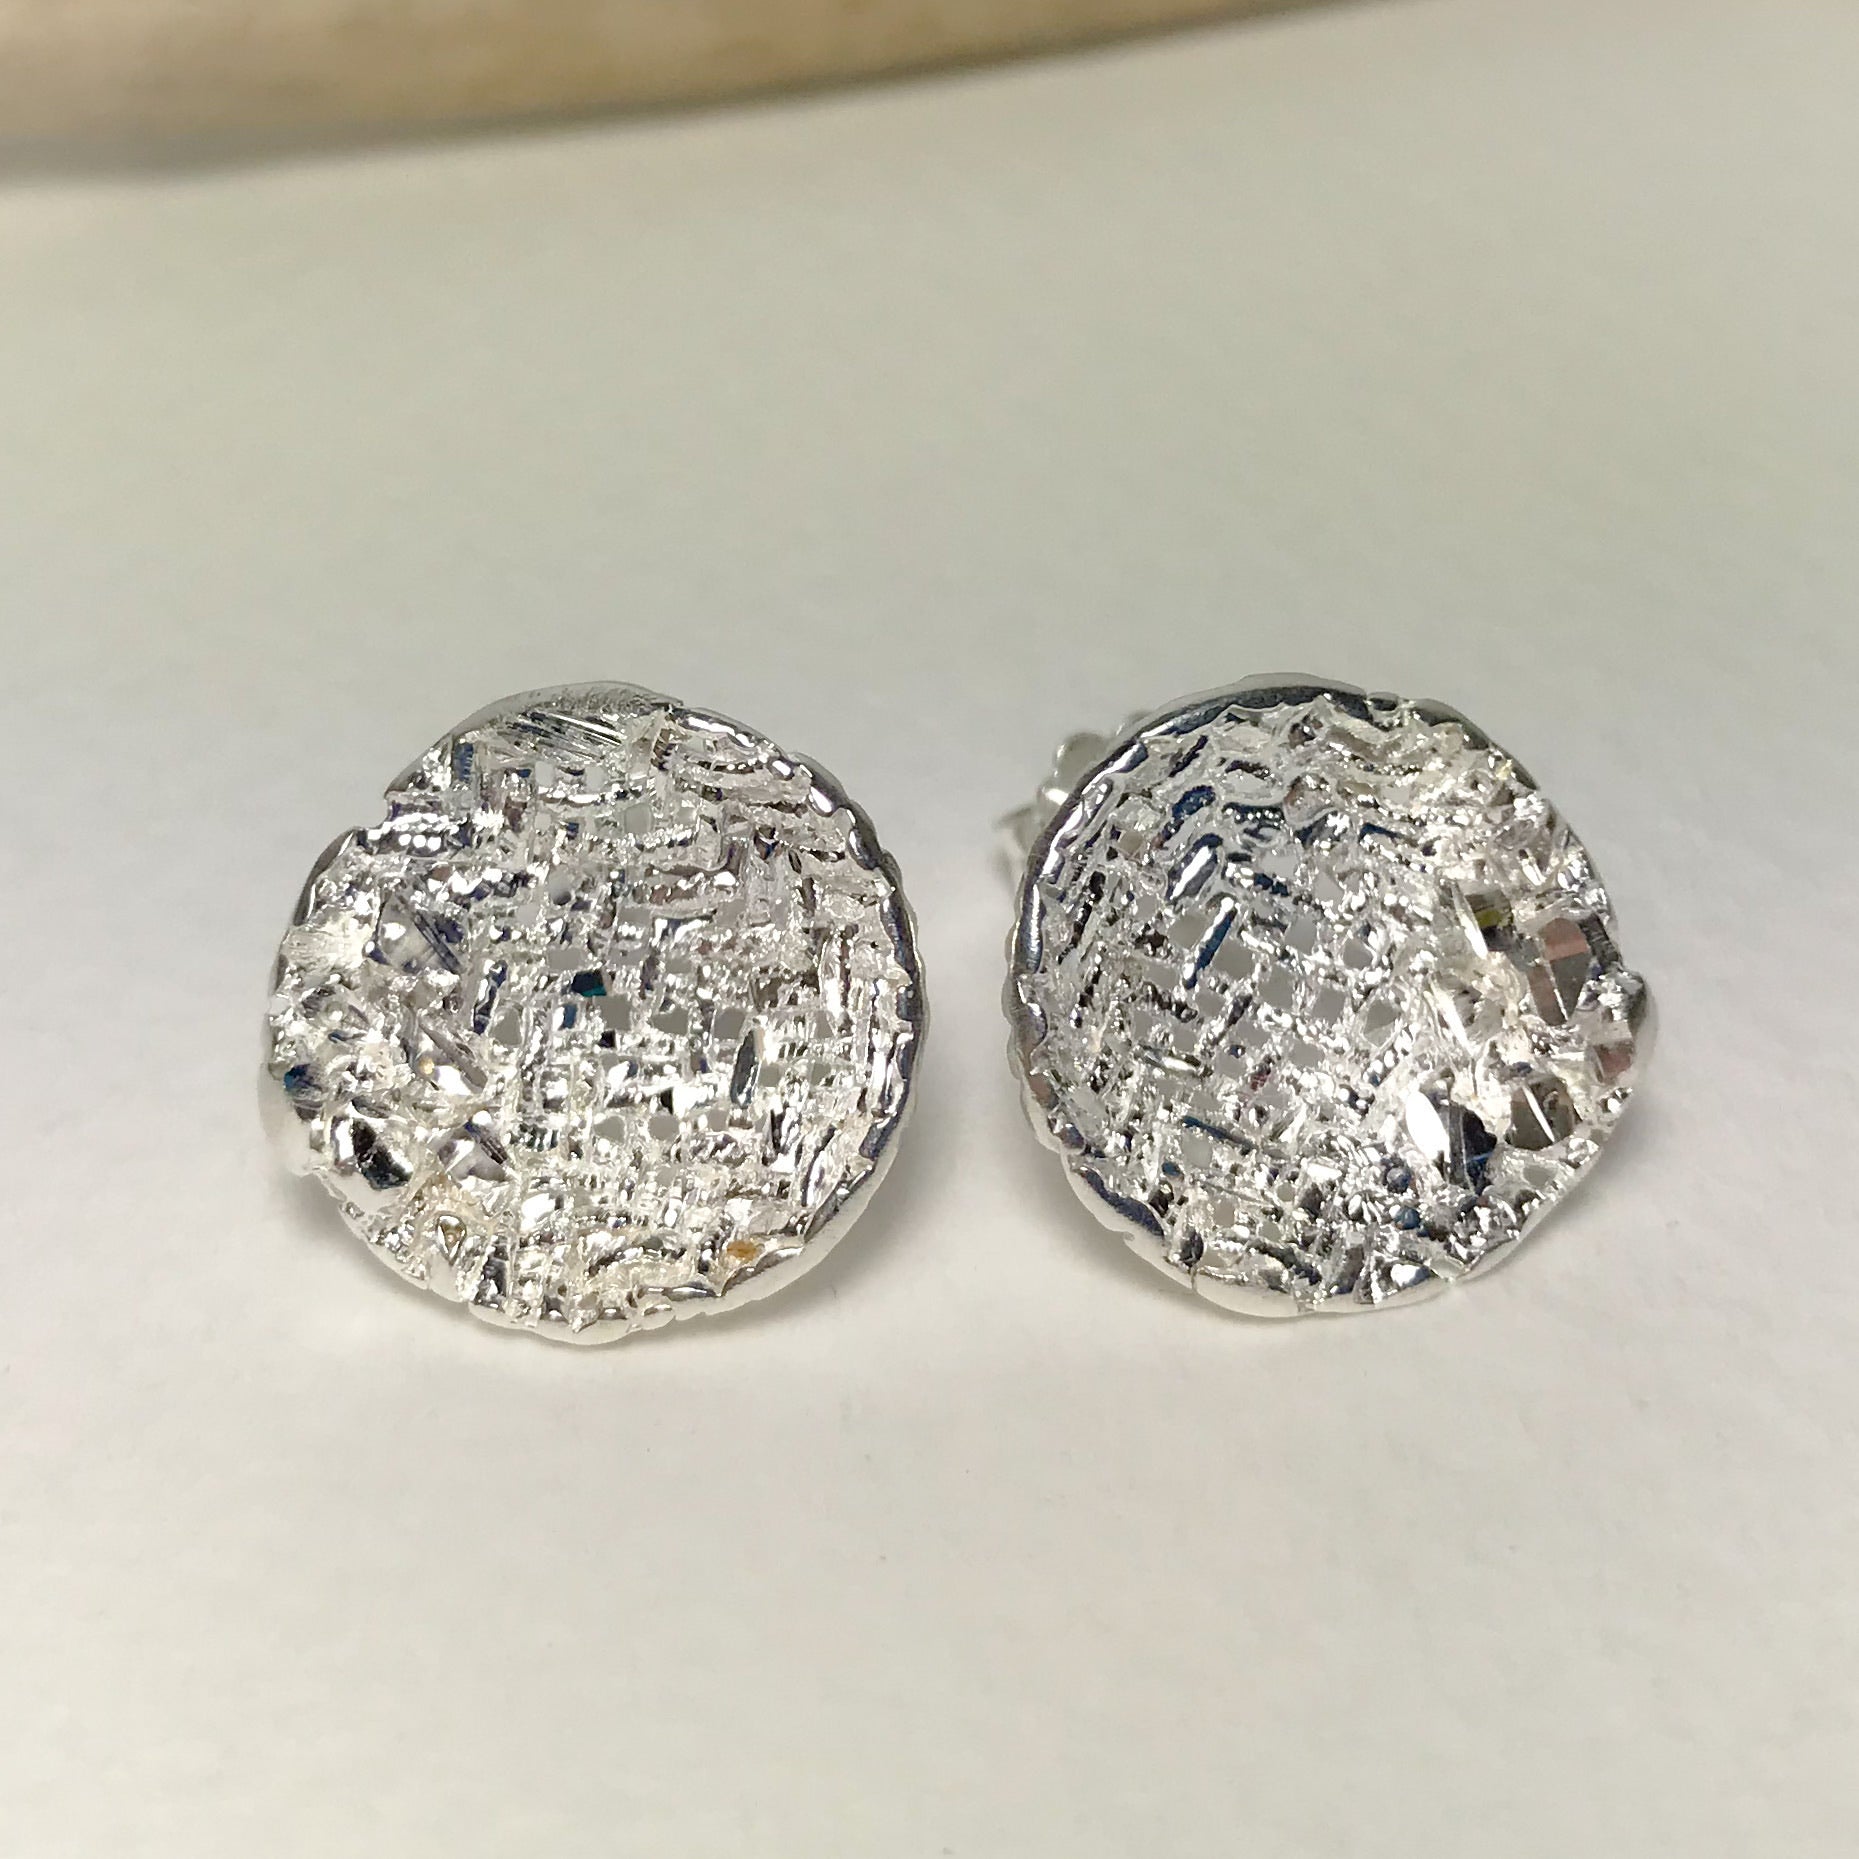 Silver Cup Earrings - The Nancy Smillie Shop - Art, Jewellery & Designer Gifts Glasgow